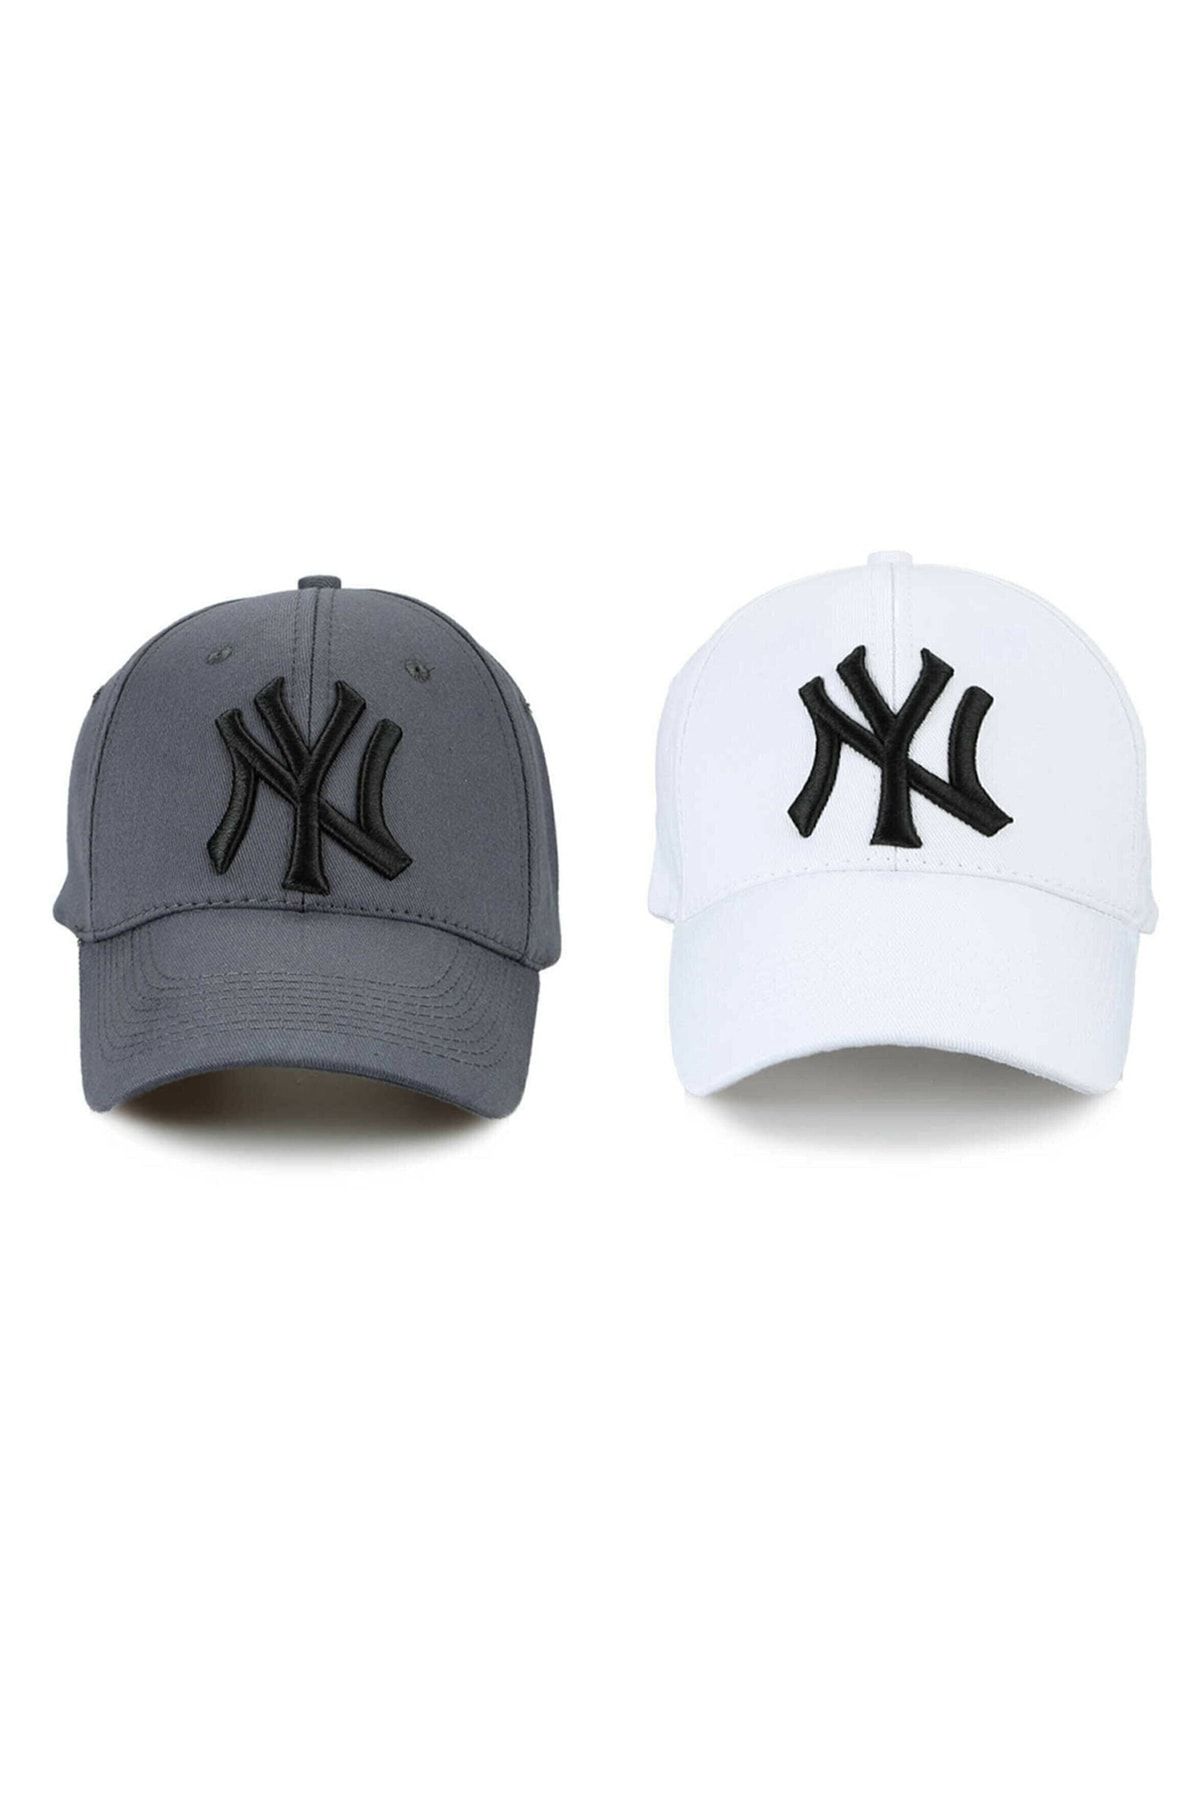 Ny New York 2'li Unisex Set Şapka Füme Ve Beyaz